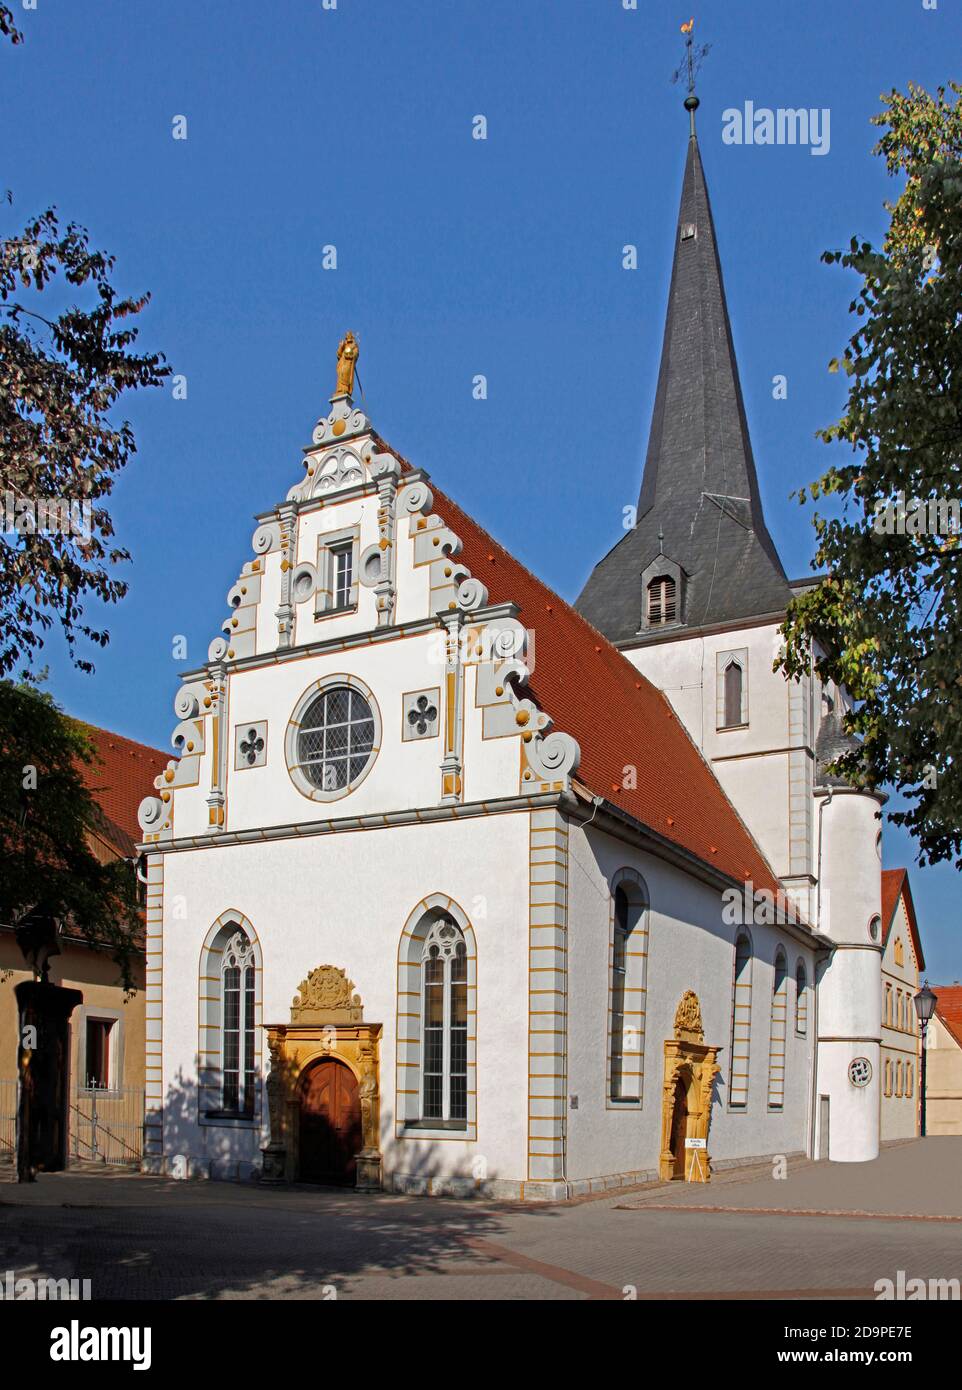 Protestant town church St. Salvator, tower built in 1543, nave built in 1611/12, master builder Jakob Müller from Heilbronn, Neckarbischofsheim, Baden-Württemberg, Germany Stock Photo